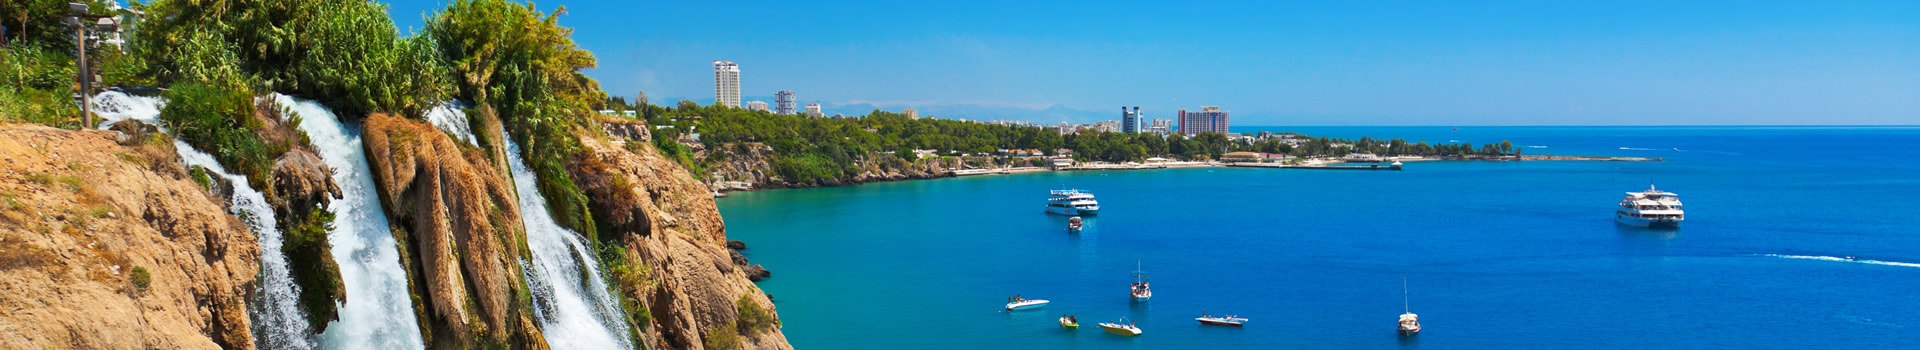 Nápoles - Antalya